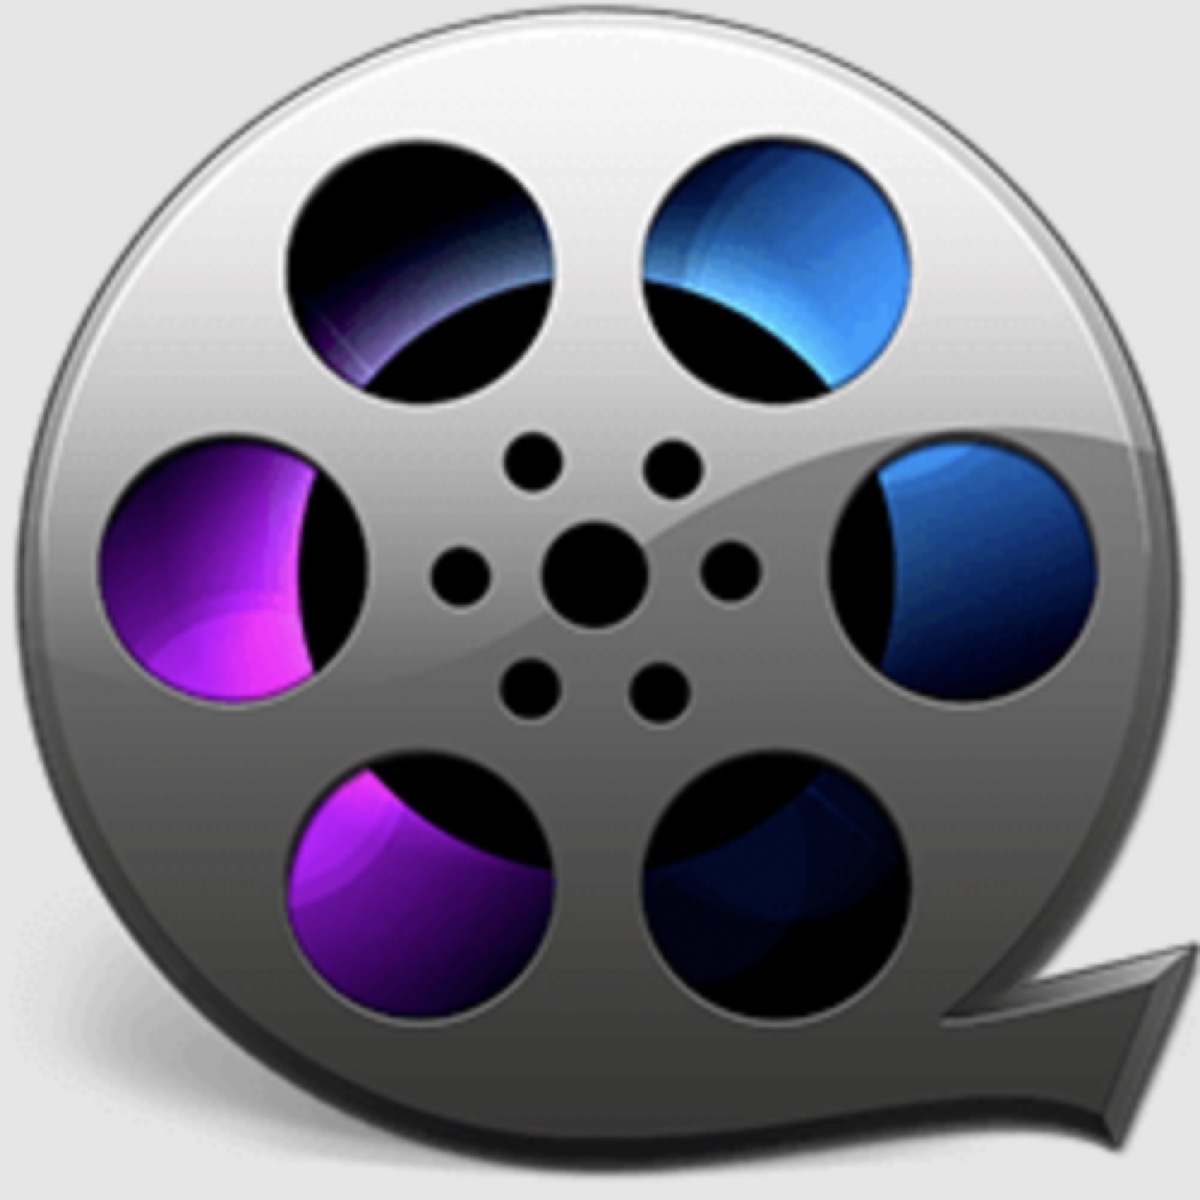 MacX Video Converter Pro for Mac